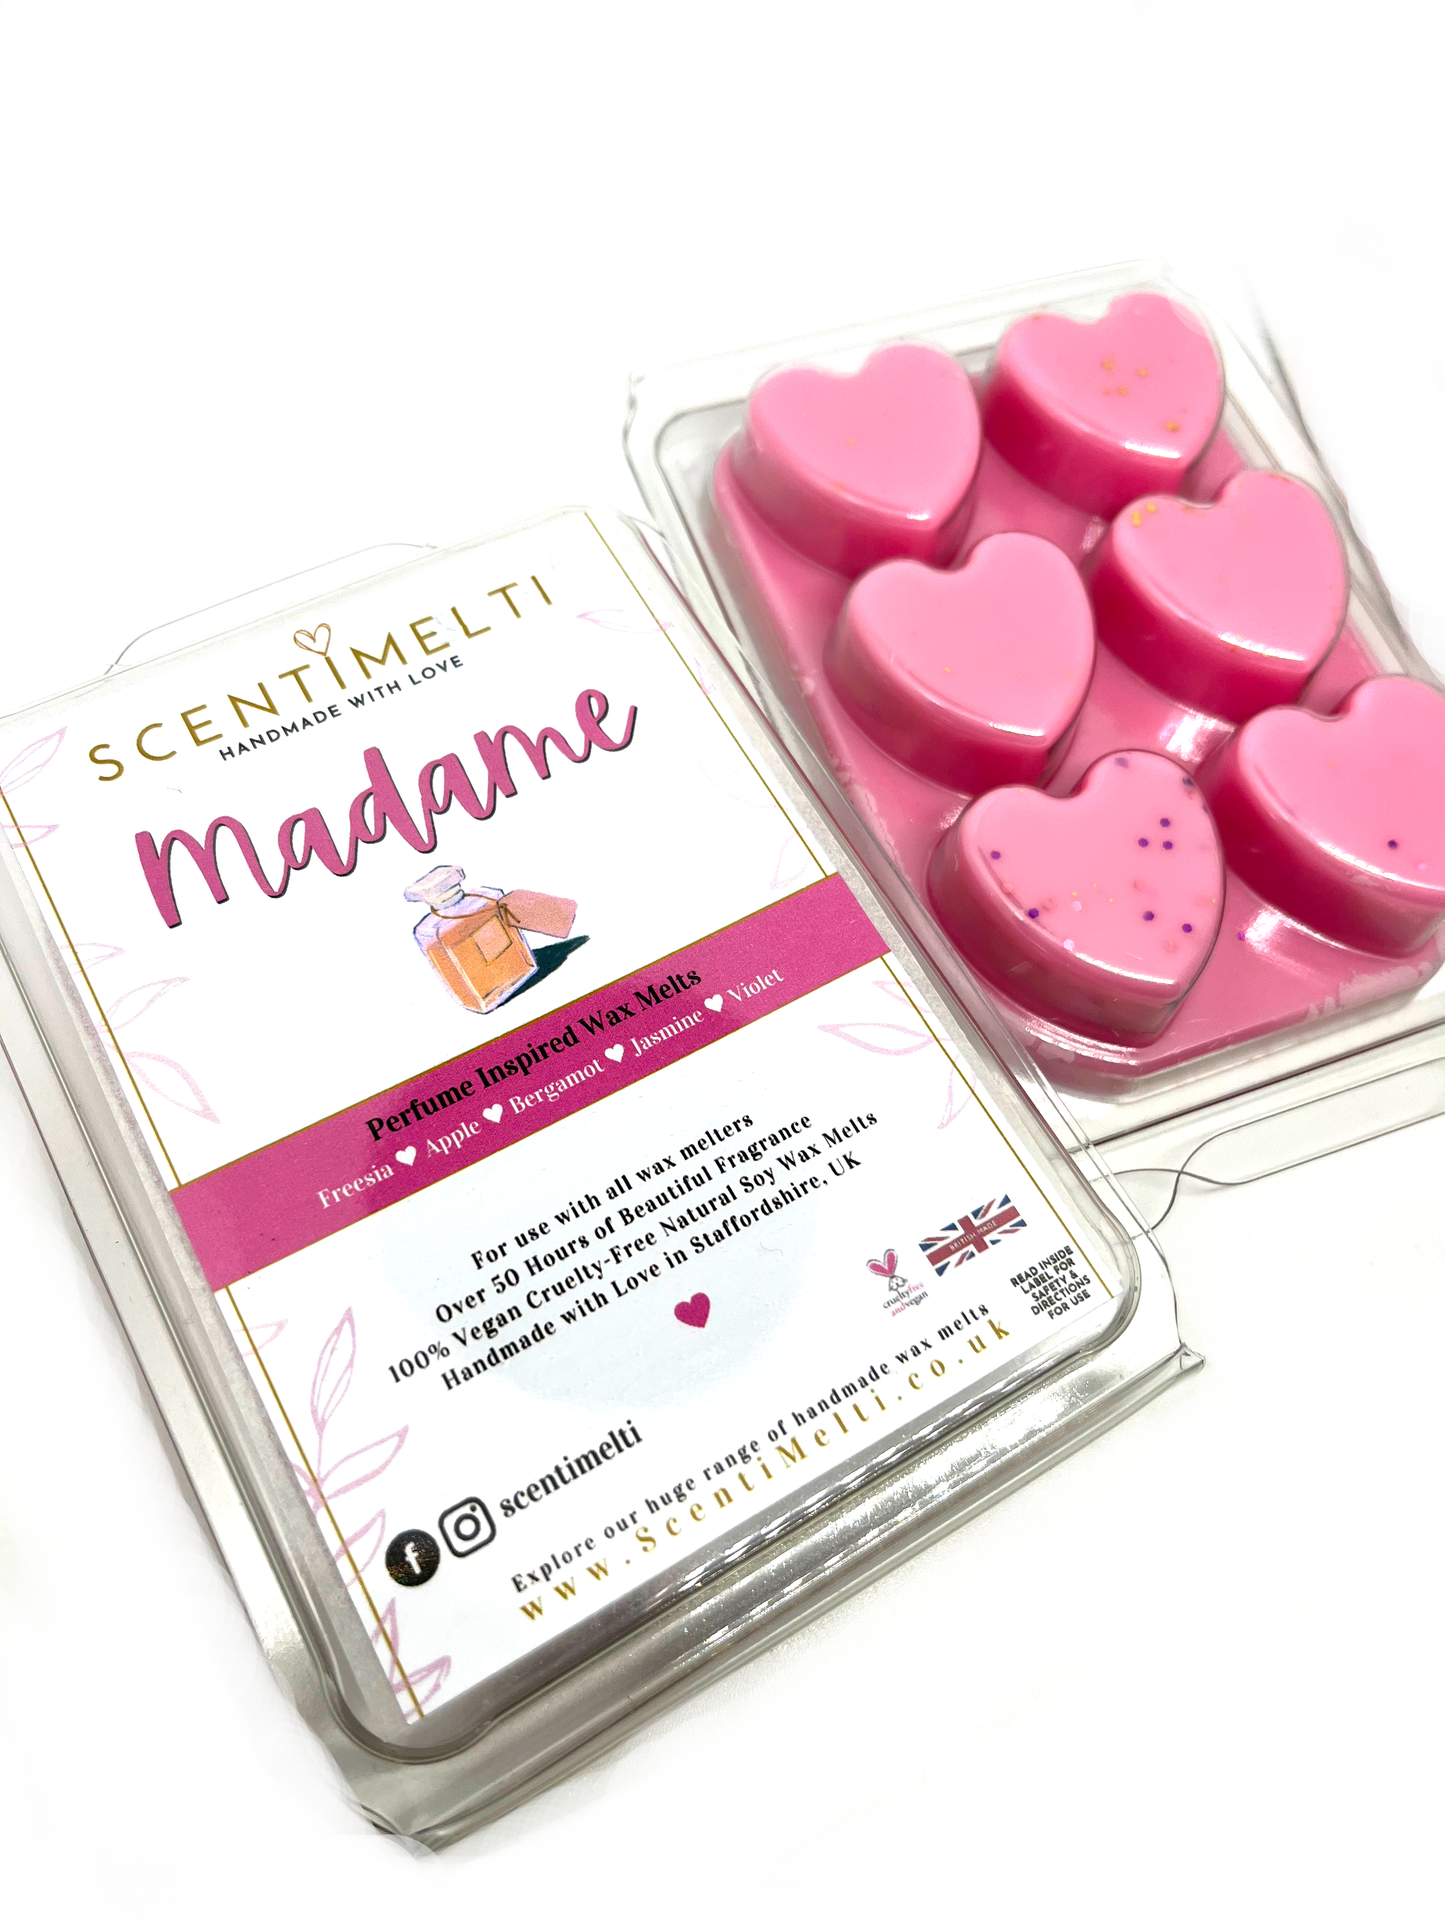 Madame Perfume Heart Clamshell Wax Melts - ScentiMelti  Madame Perfume Heart Clamshell Wax Melts